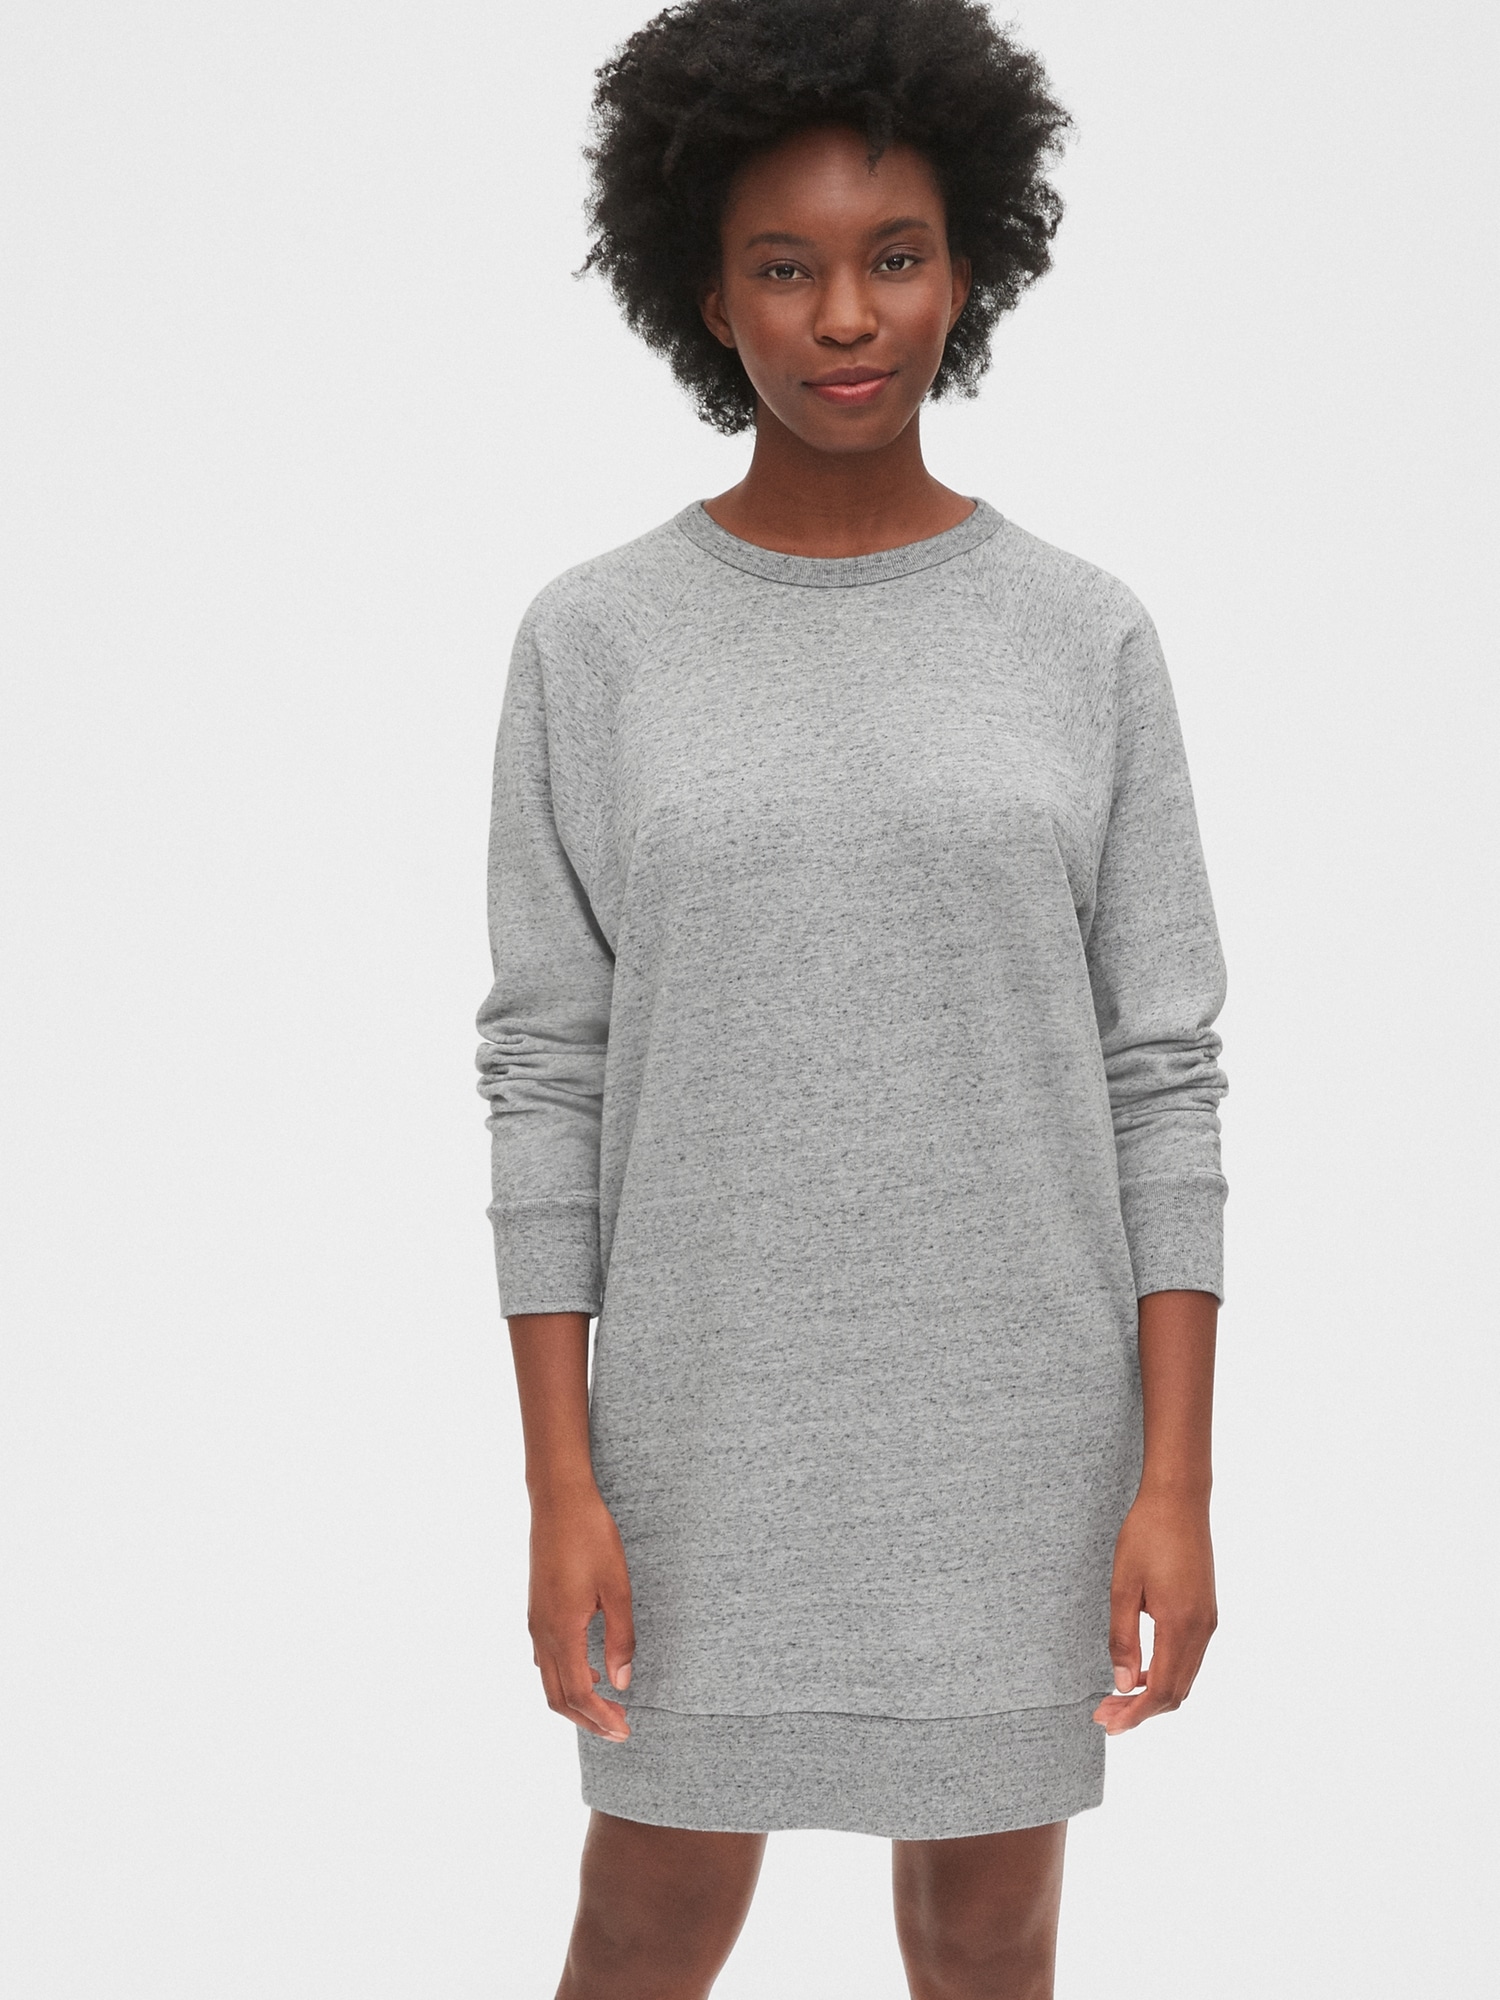 Raglan Sweatshirt Dress | Gap